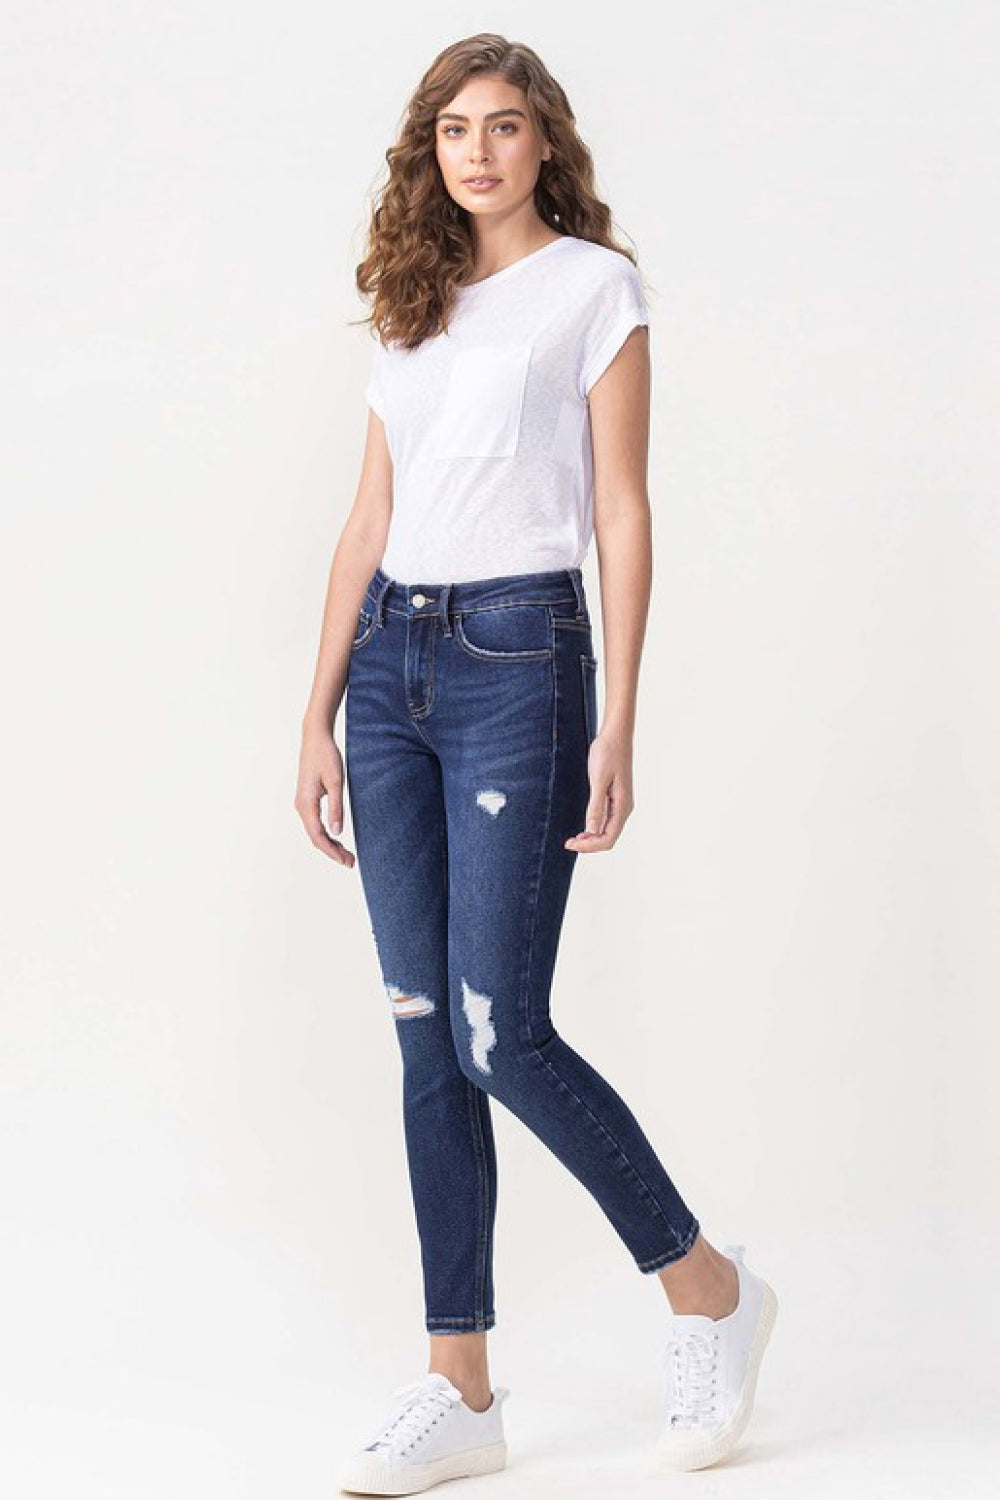 Lovervet Chelsea Midrise Crop Skinny Jeans